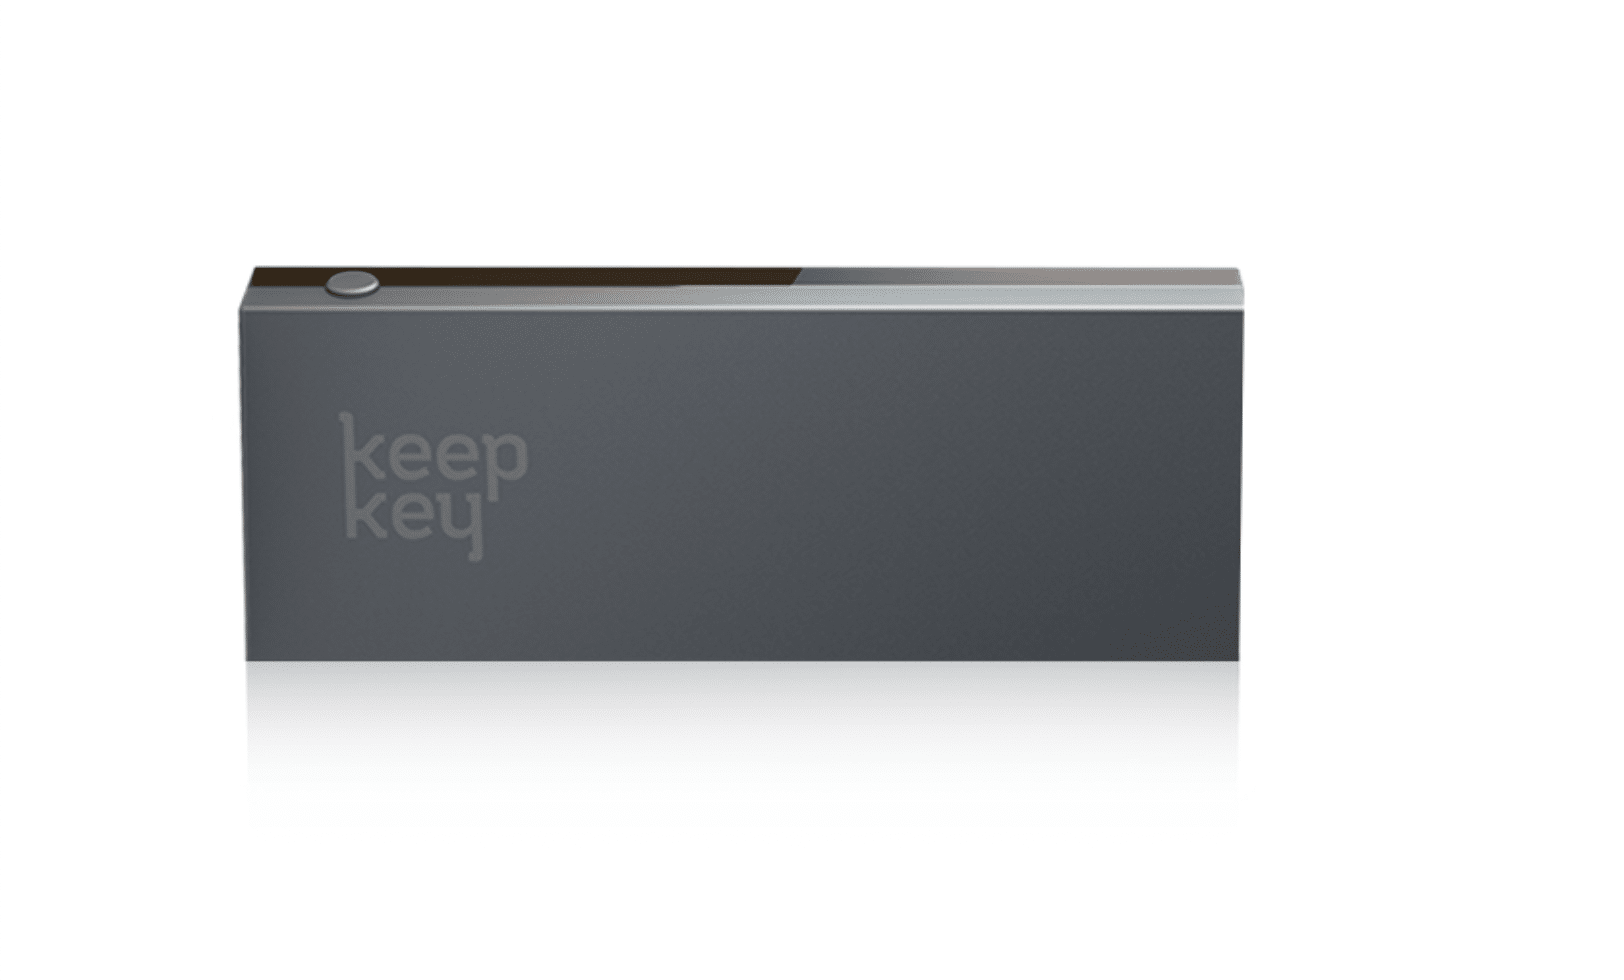 The KeepKey hardware wallet | Source: KeepKey